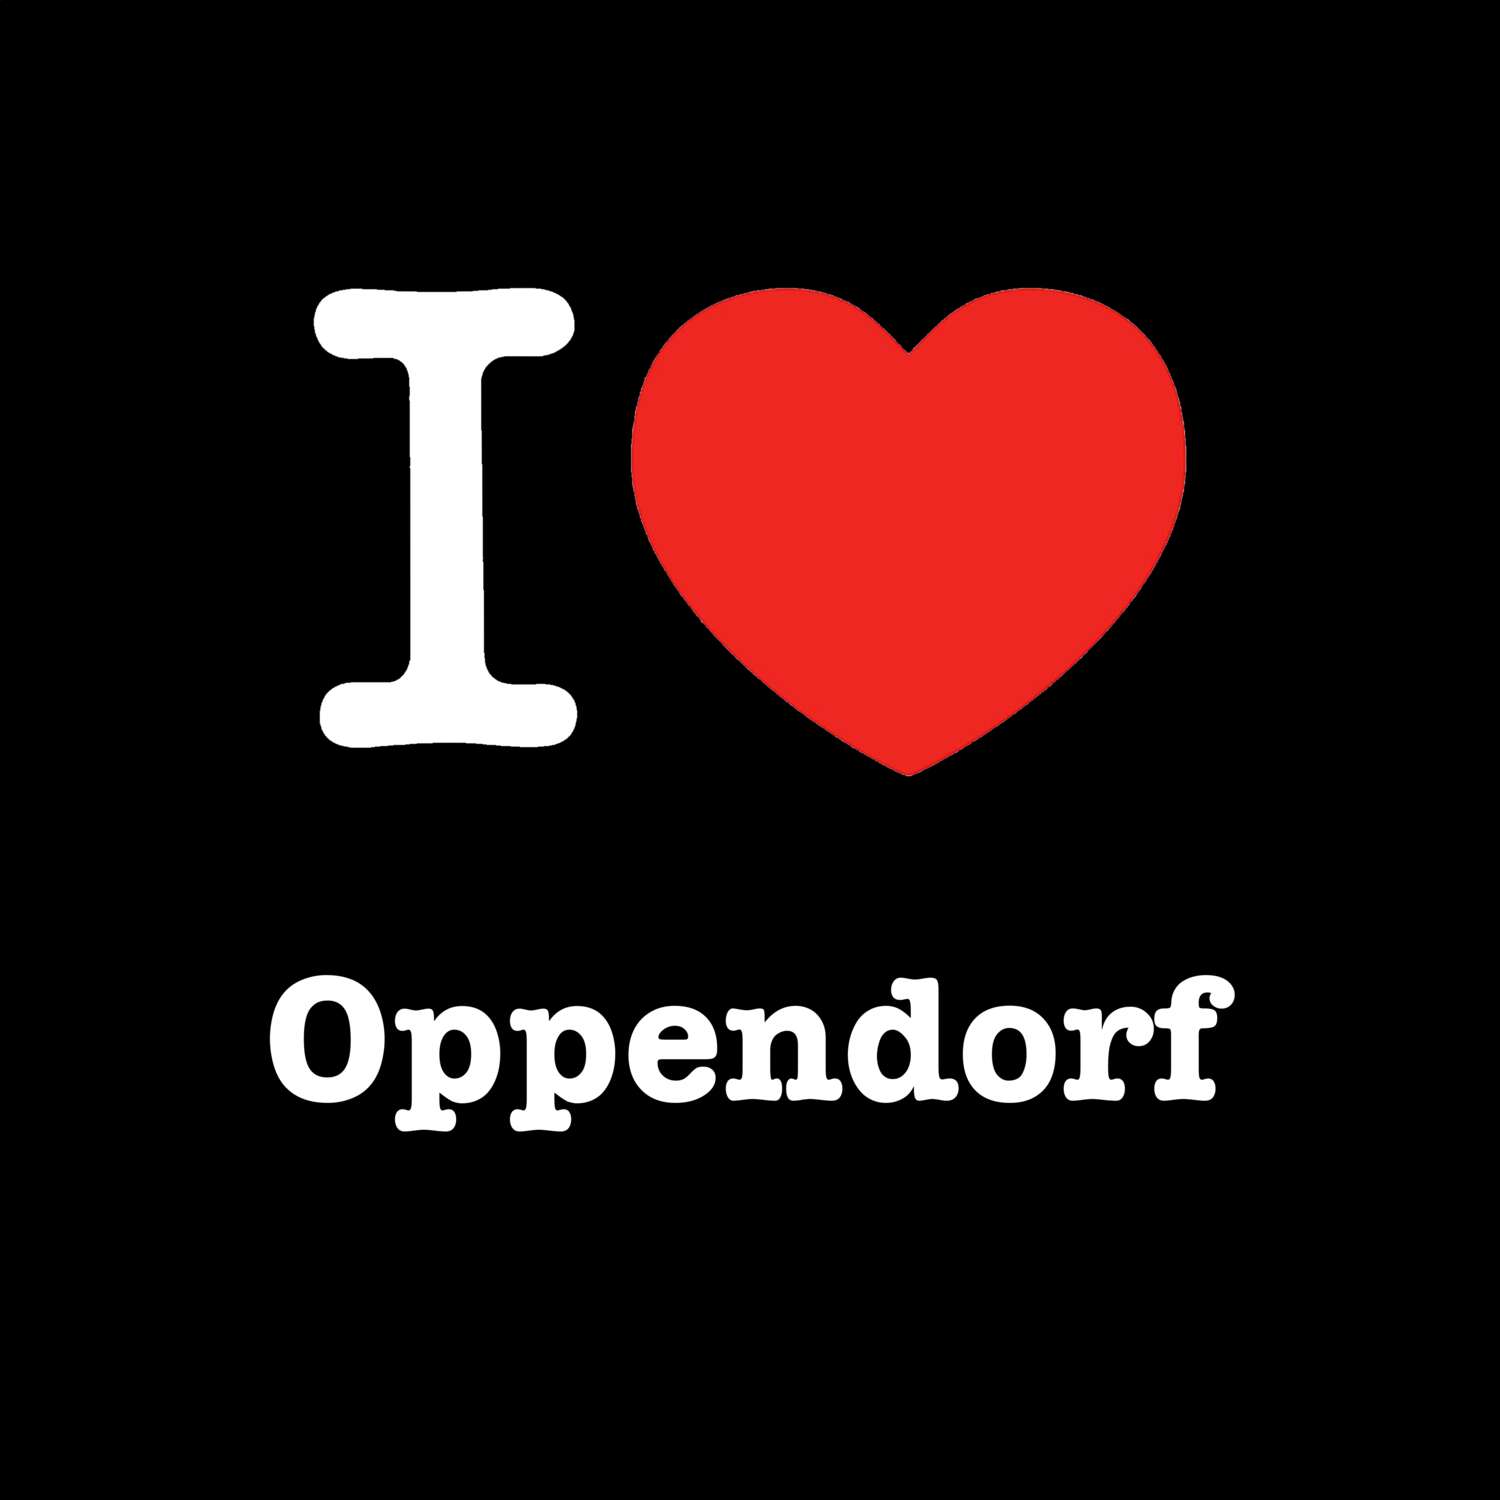 Oppendorf T-Shirt »I love«